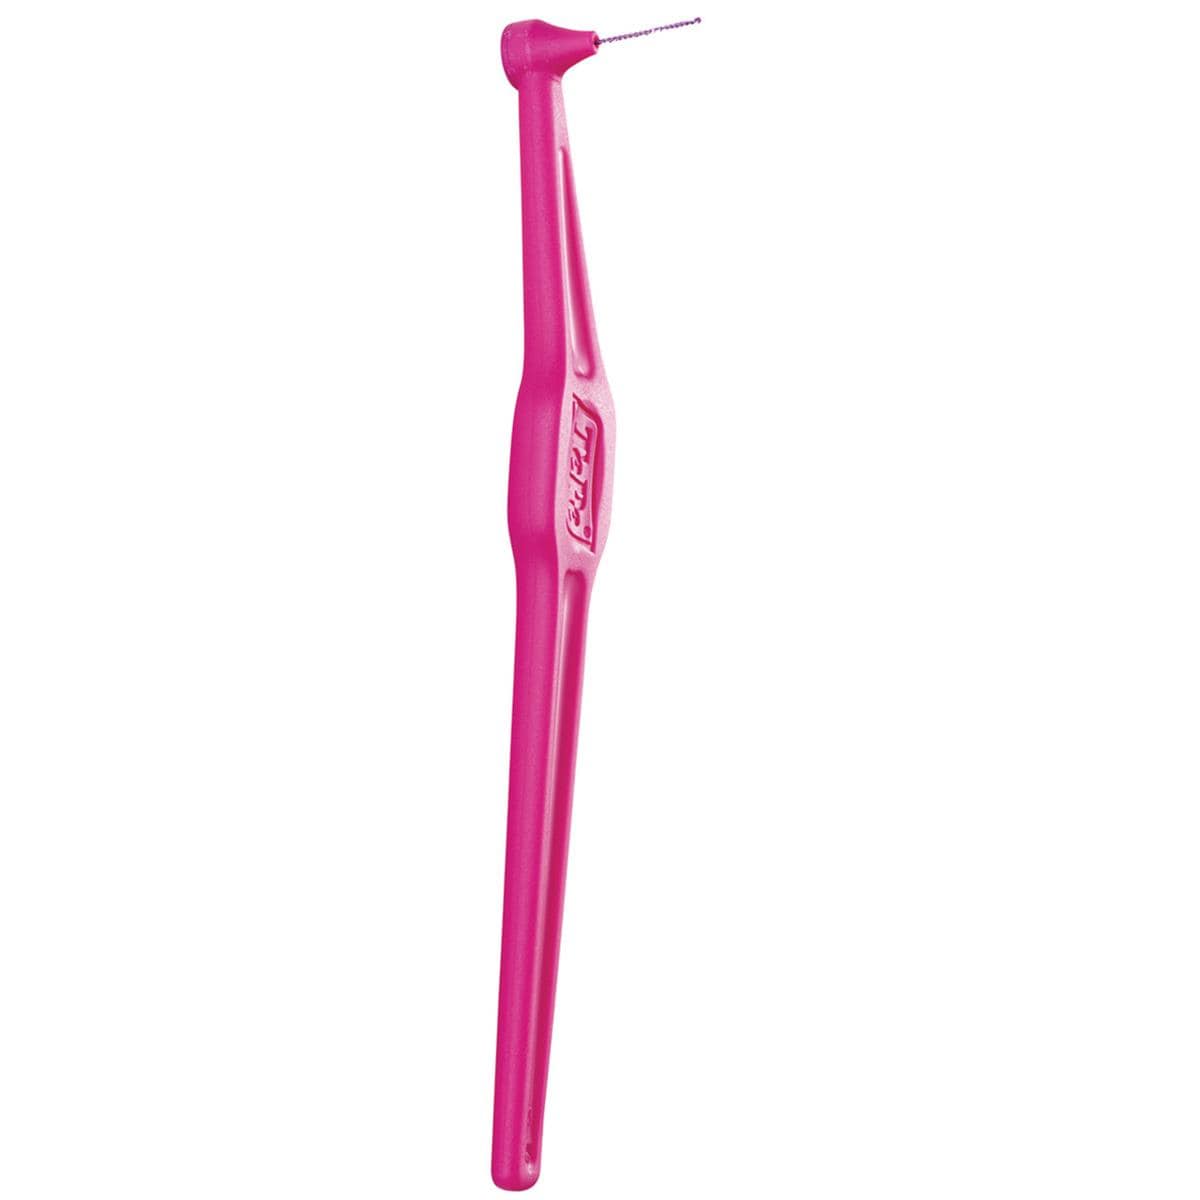 TePe Angle Interdental Brush Pink 0.40mm 10 x 6pk